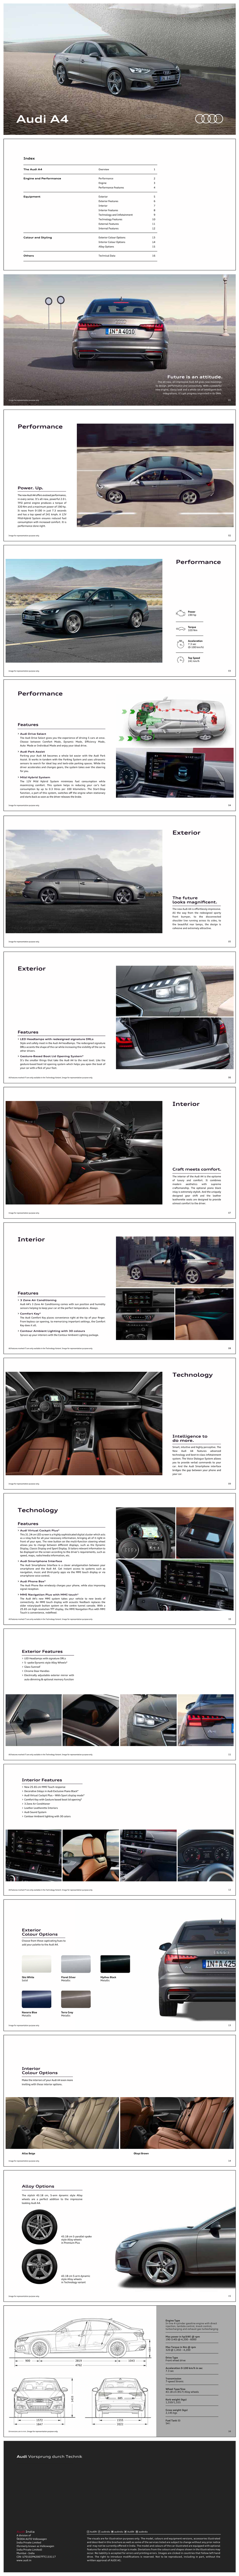 050 Audi A4 Digital Brochure Low